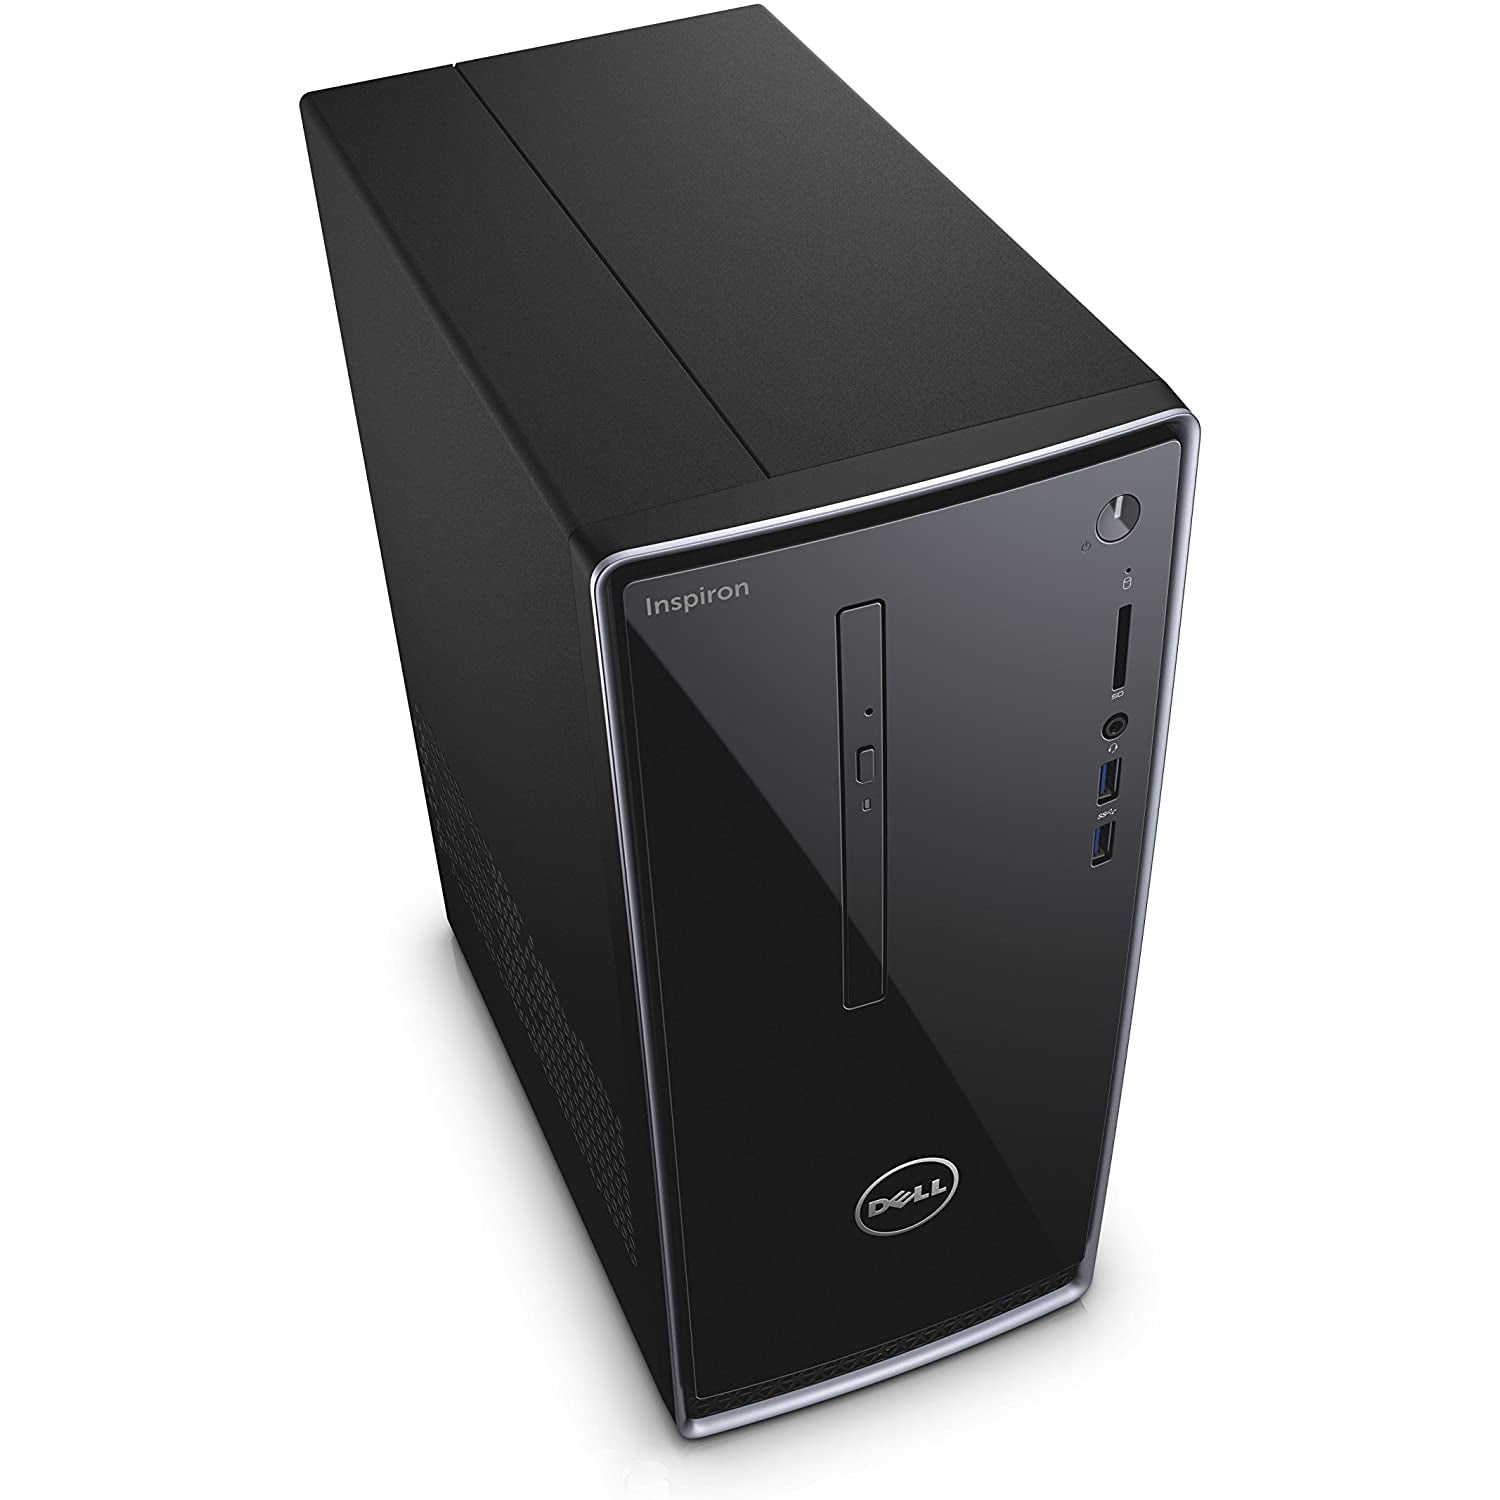 Dell Inspiron 3650 Tower Desktop Computer, Intel Core i3 6100, 8GB Ram, 500GB HDD, Windows 10, Black